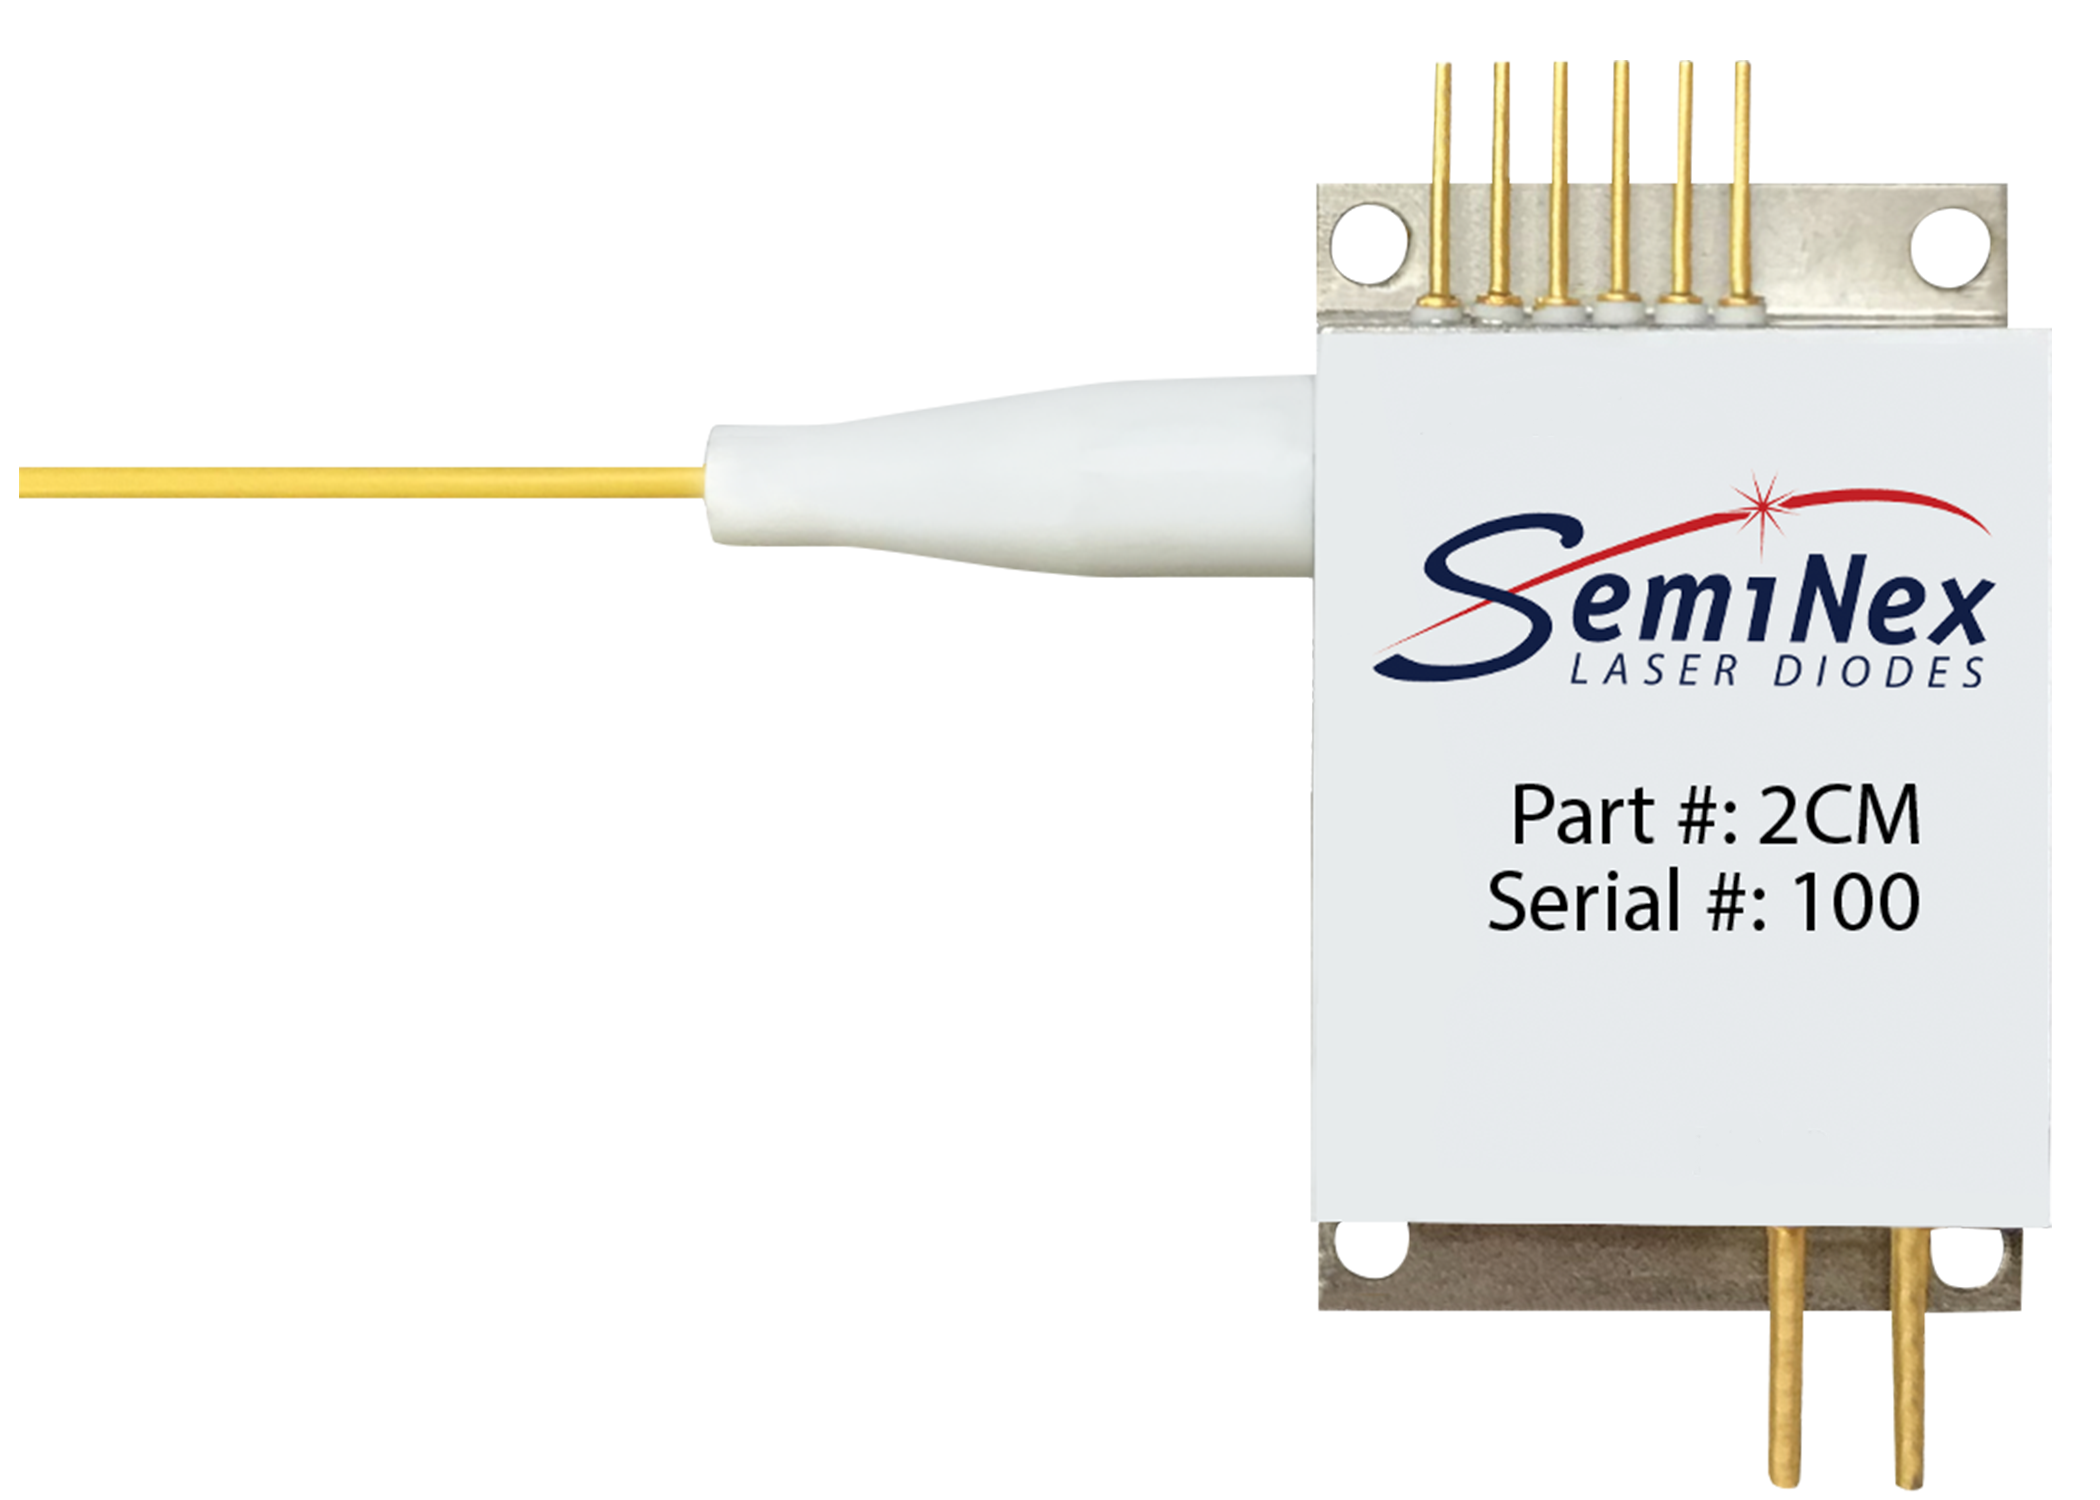 SemiNex Corp